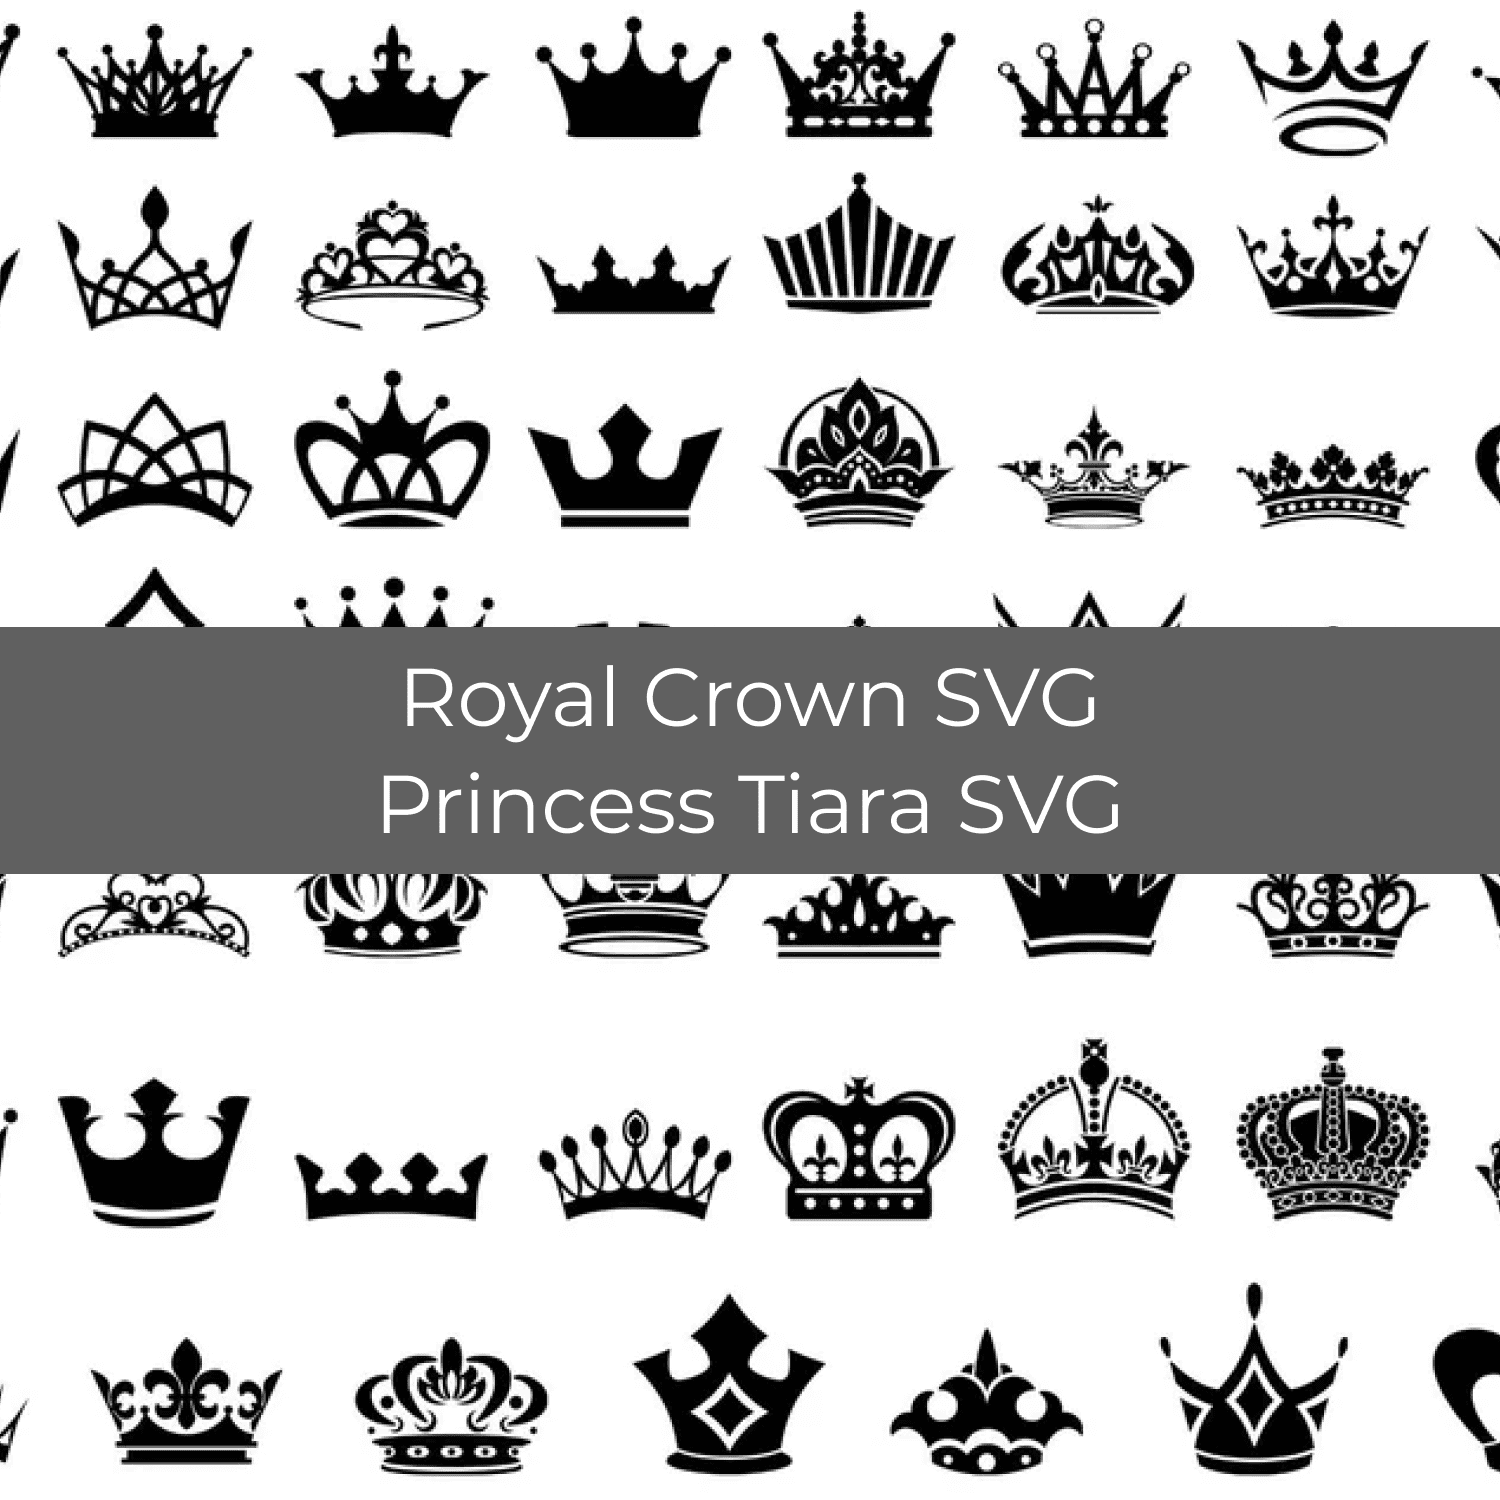 Queen Crown SVG Files image.